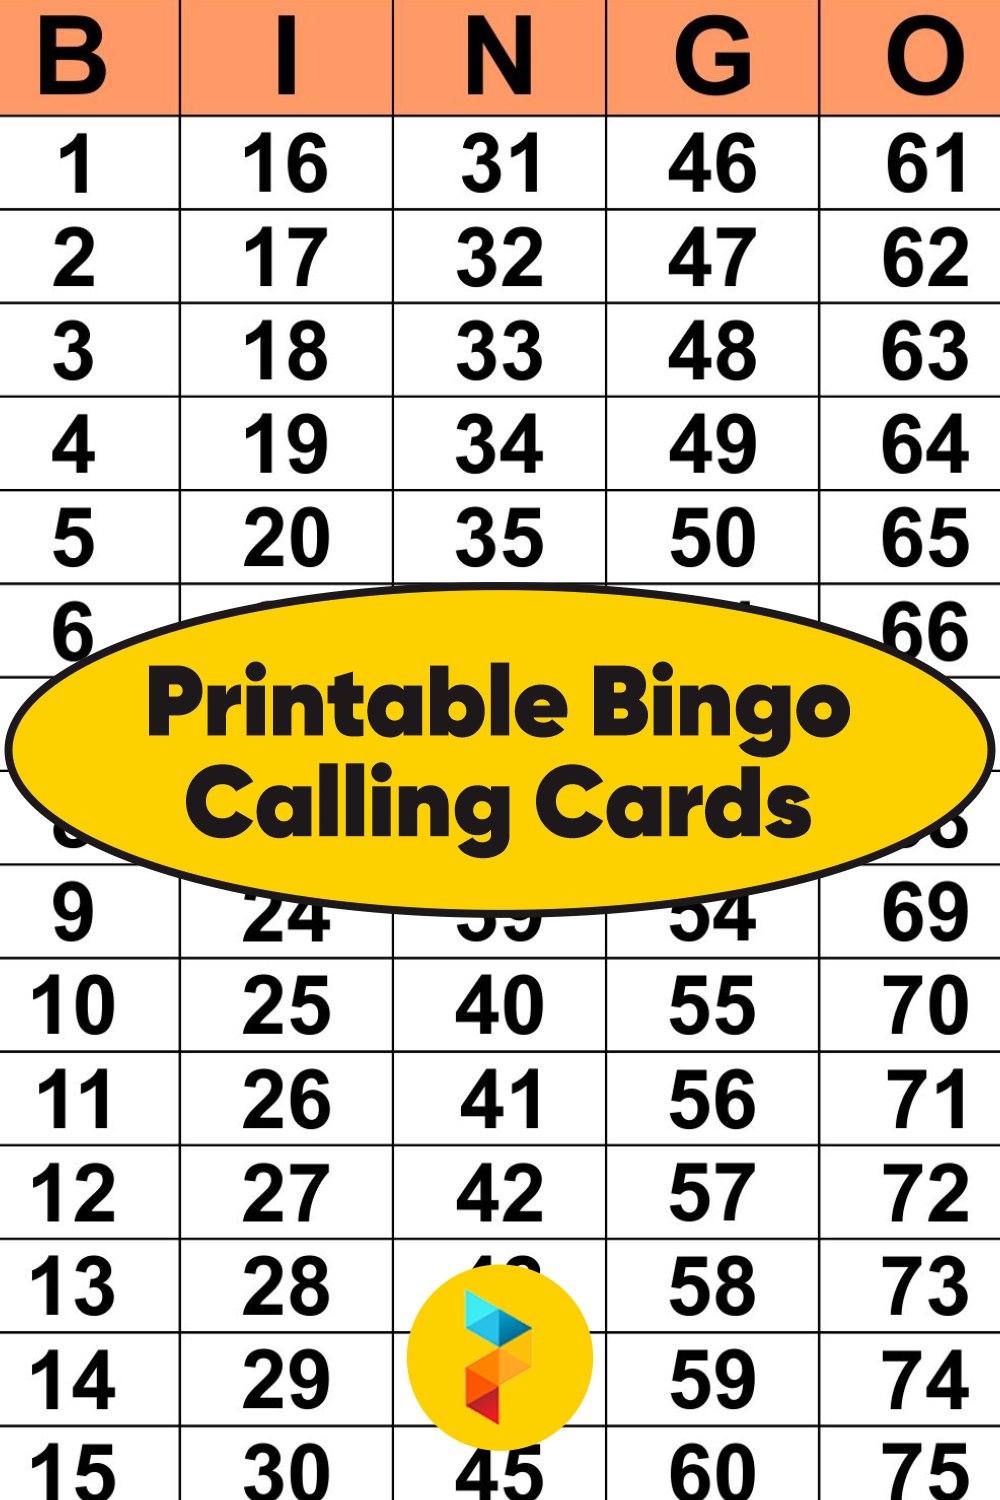 Printable Bingo Calling Cards